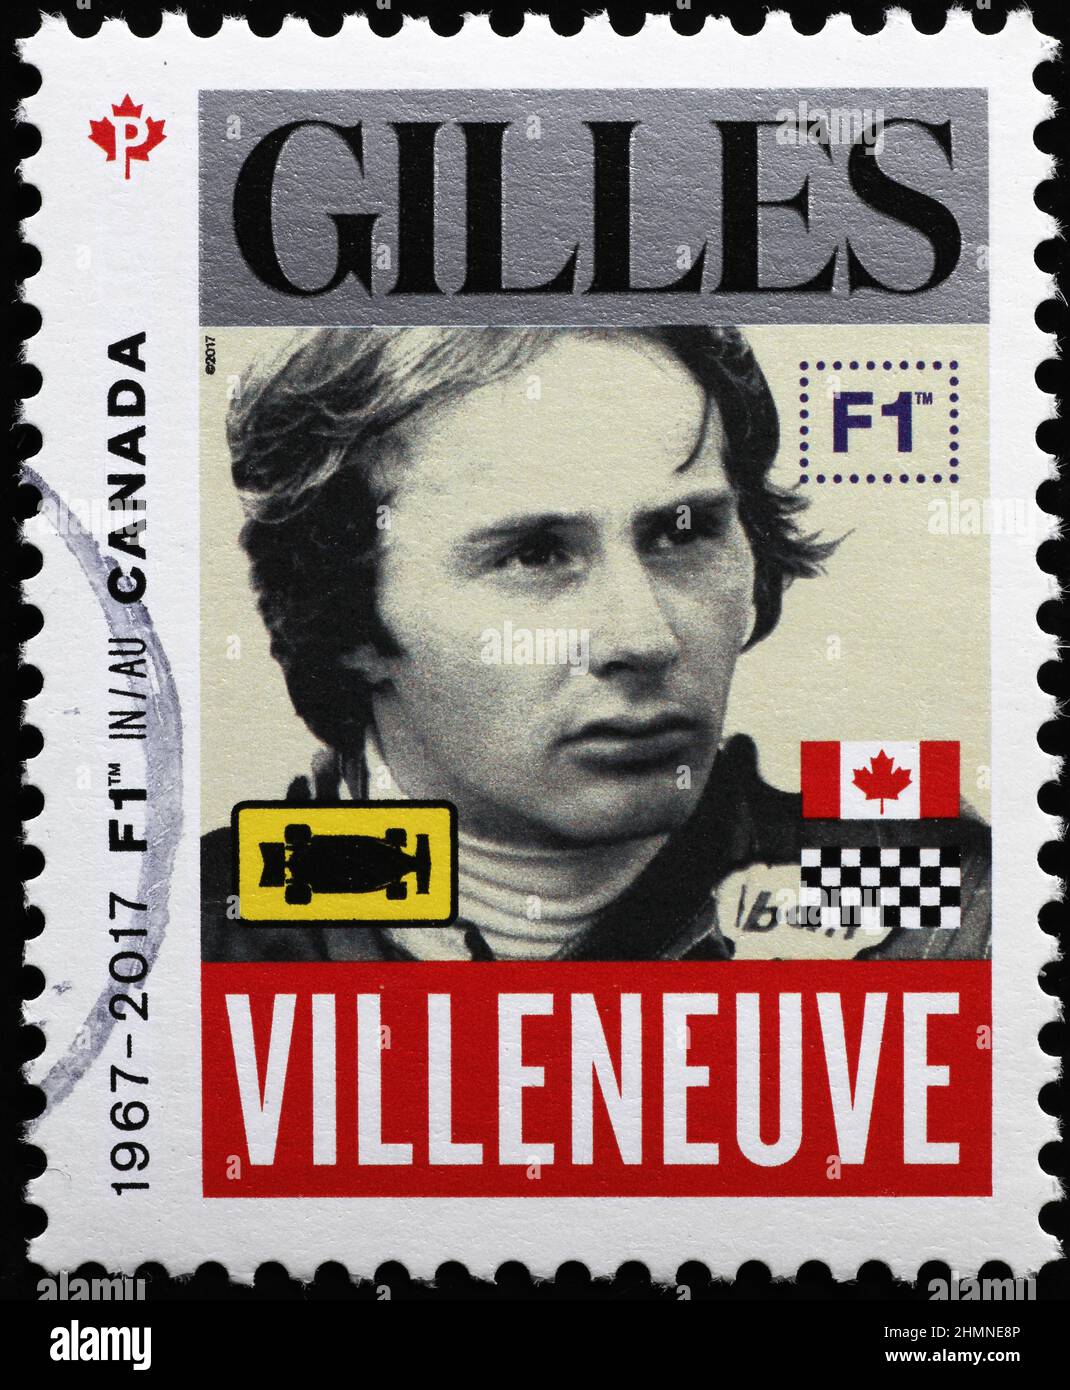 Gilles Villeneuve portrait on postage stamp Stock Photo